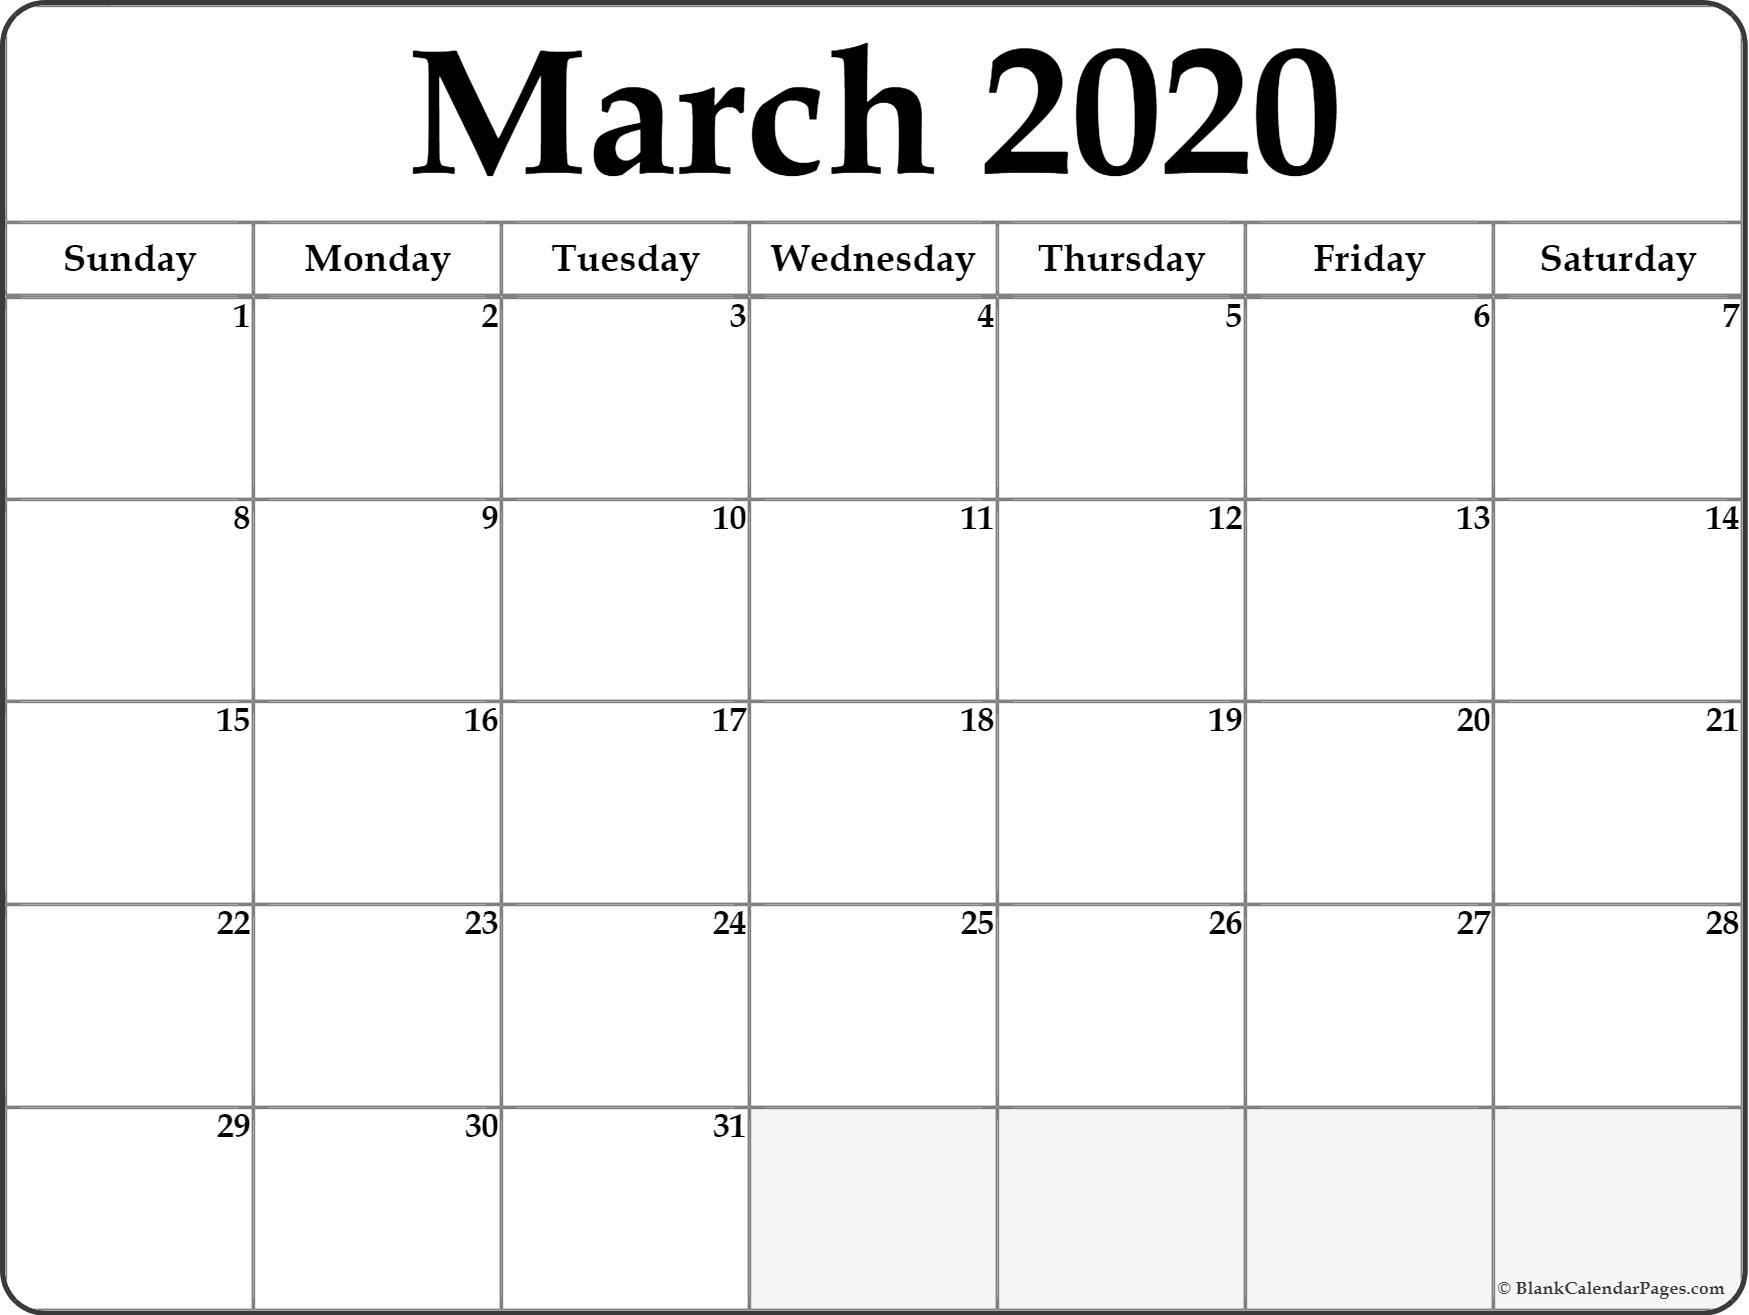 CAL=March 2020 calendar